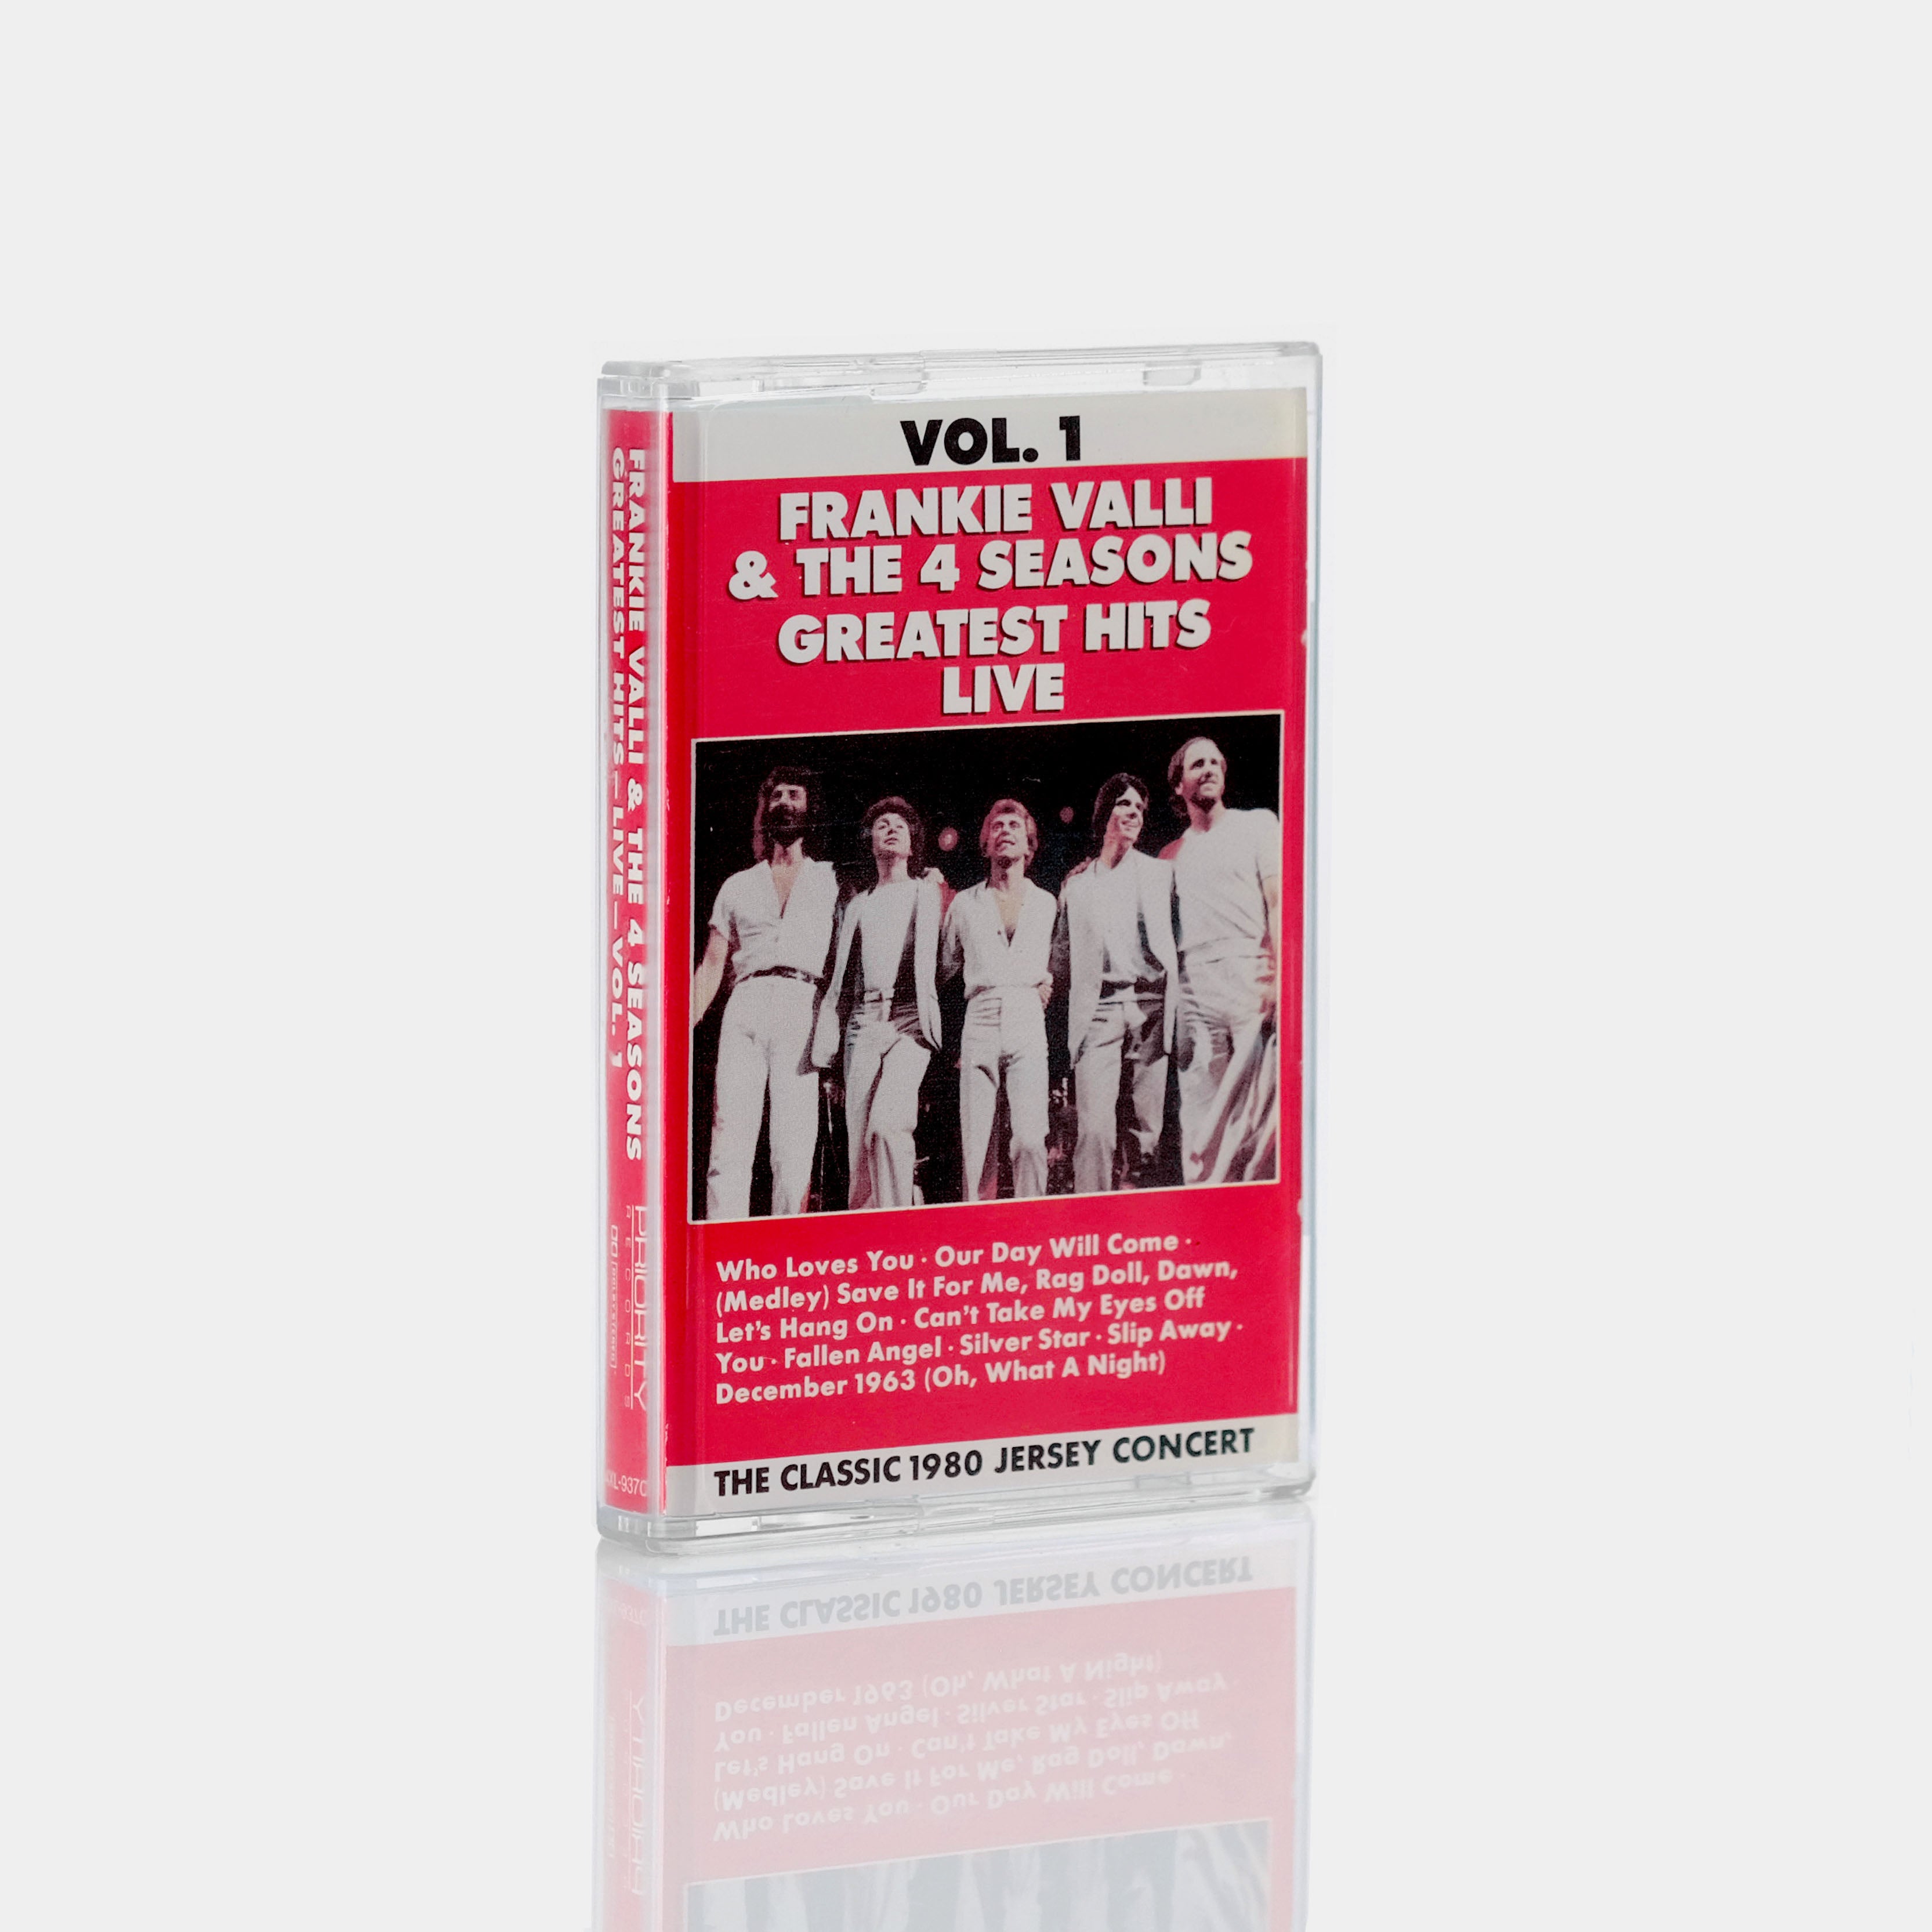 Frankie Valli & The Four Seasons - Greatest Hits Live Vol. 1 Cassette Tape